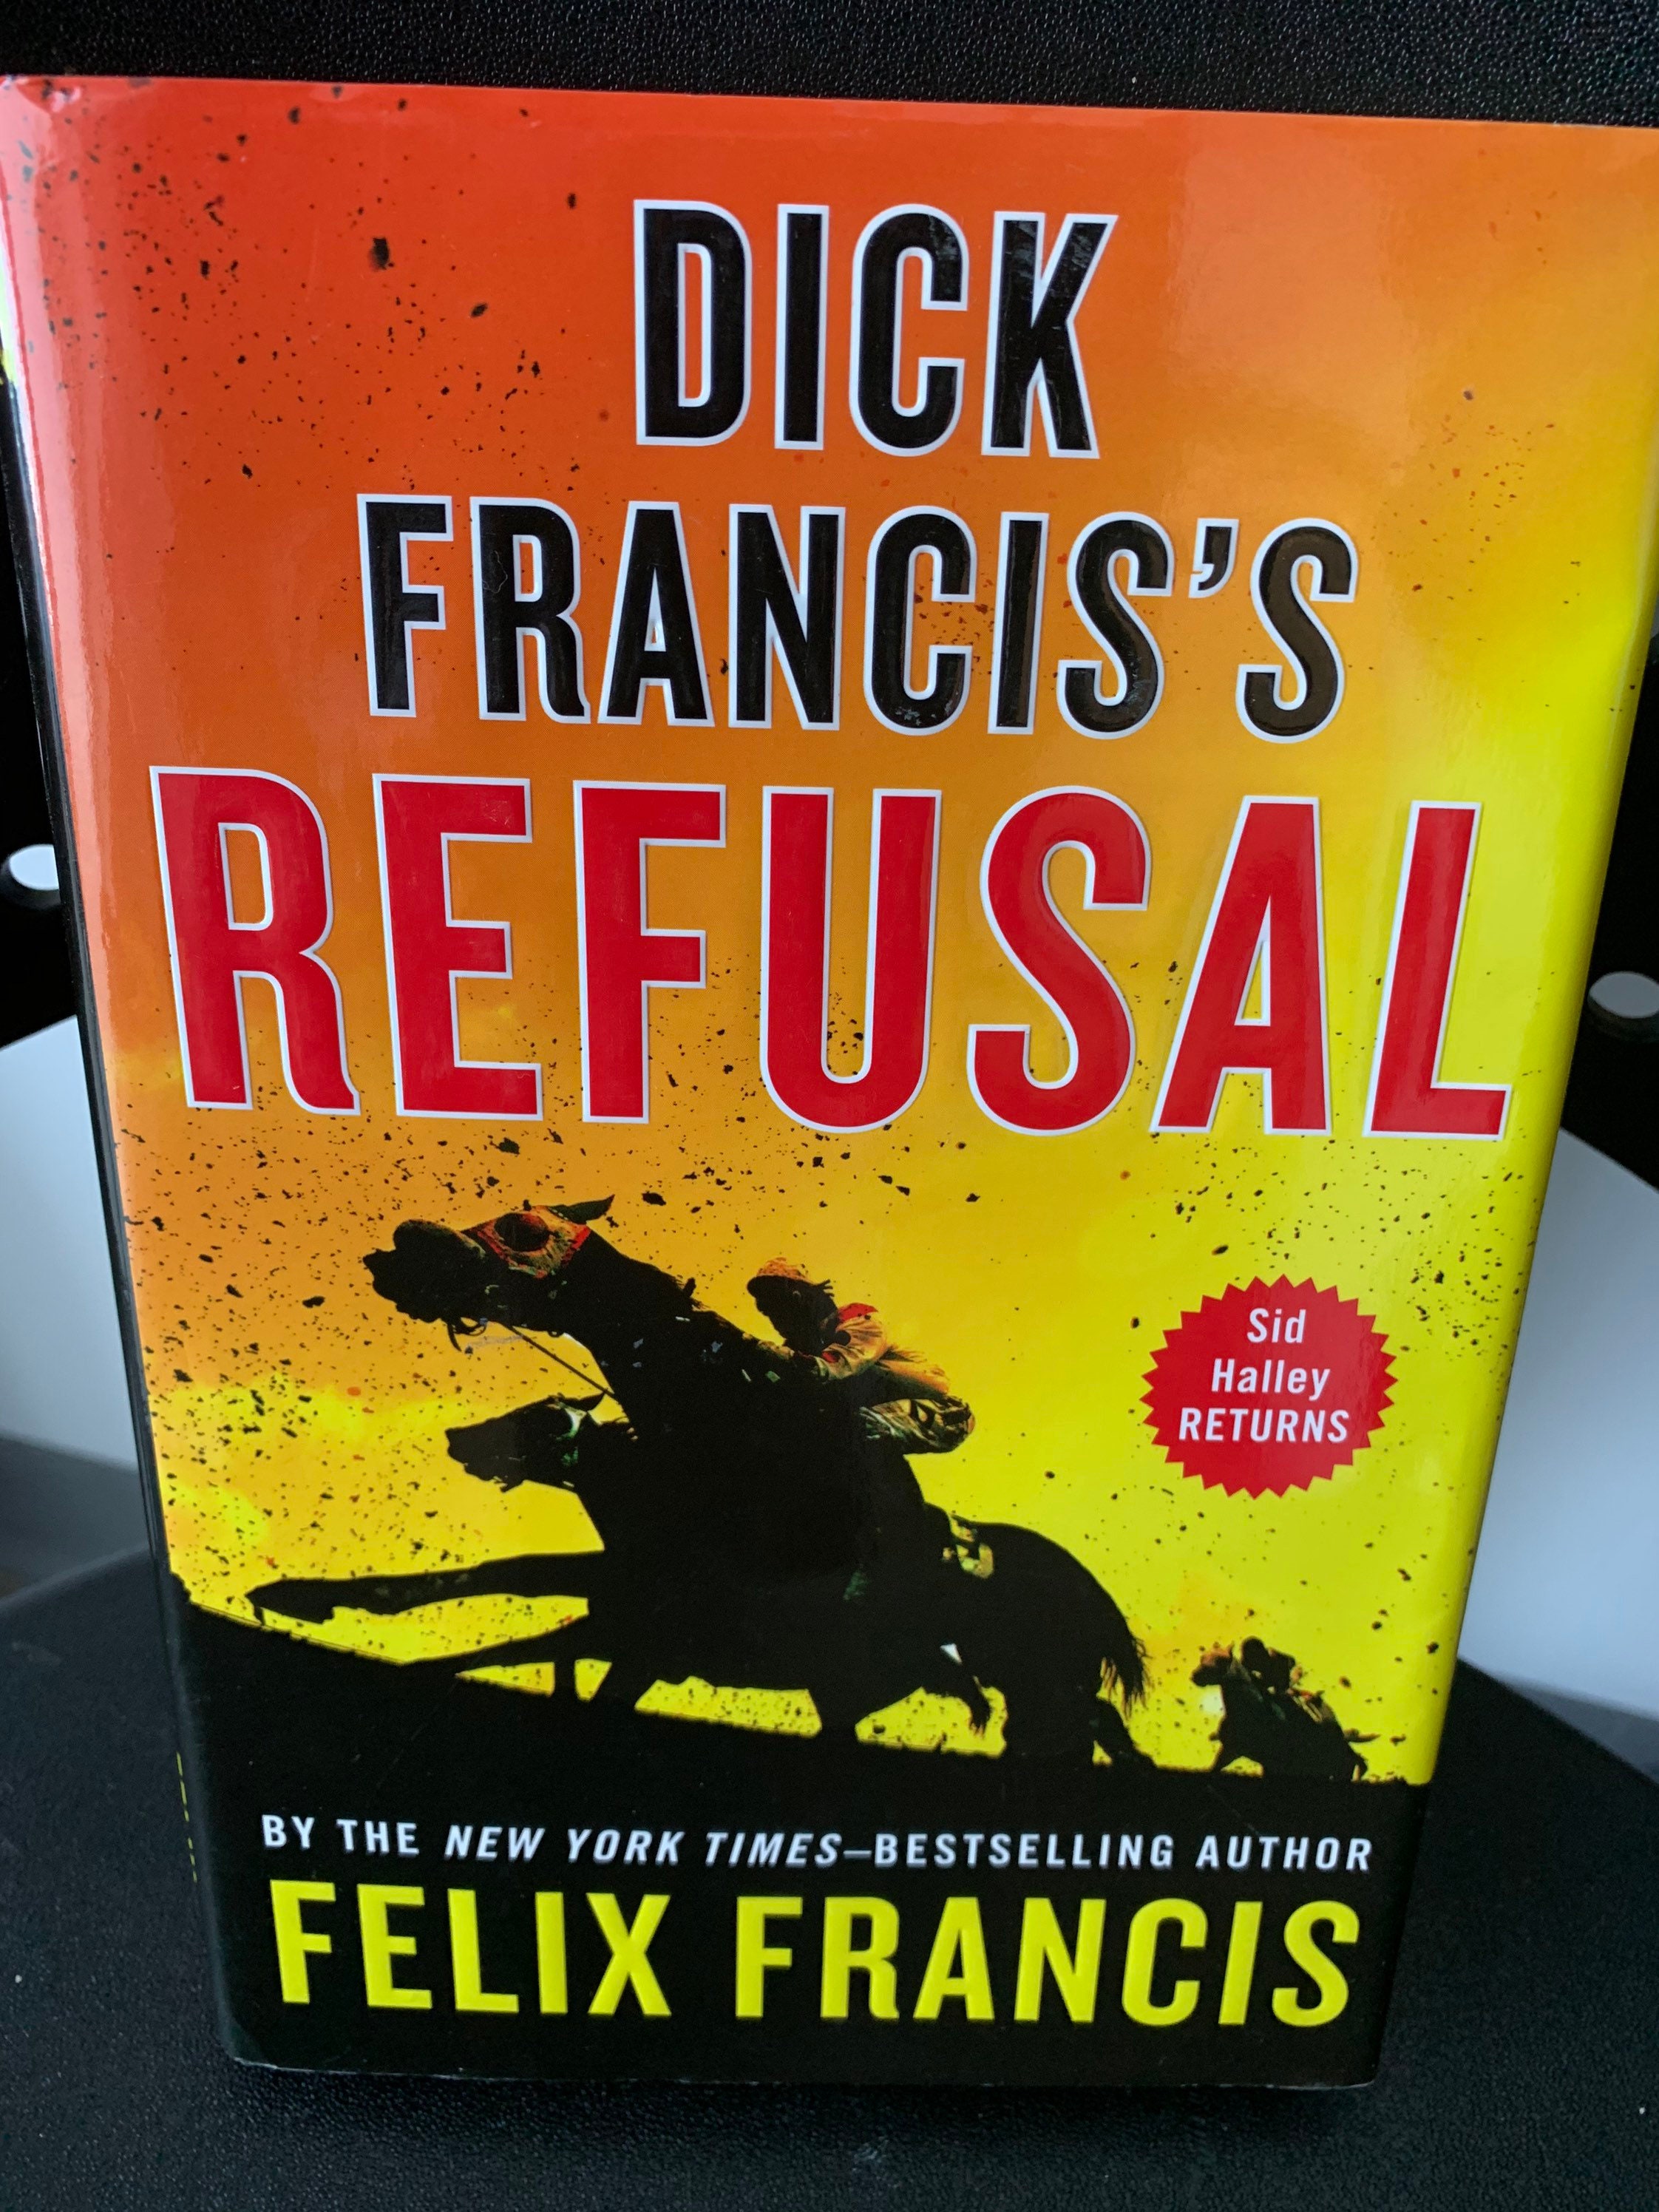 Dick francis and felix francis